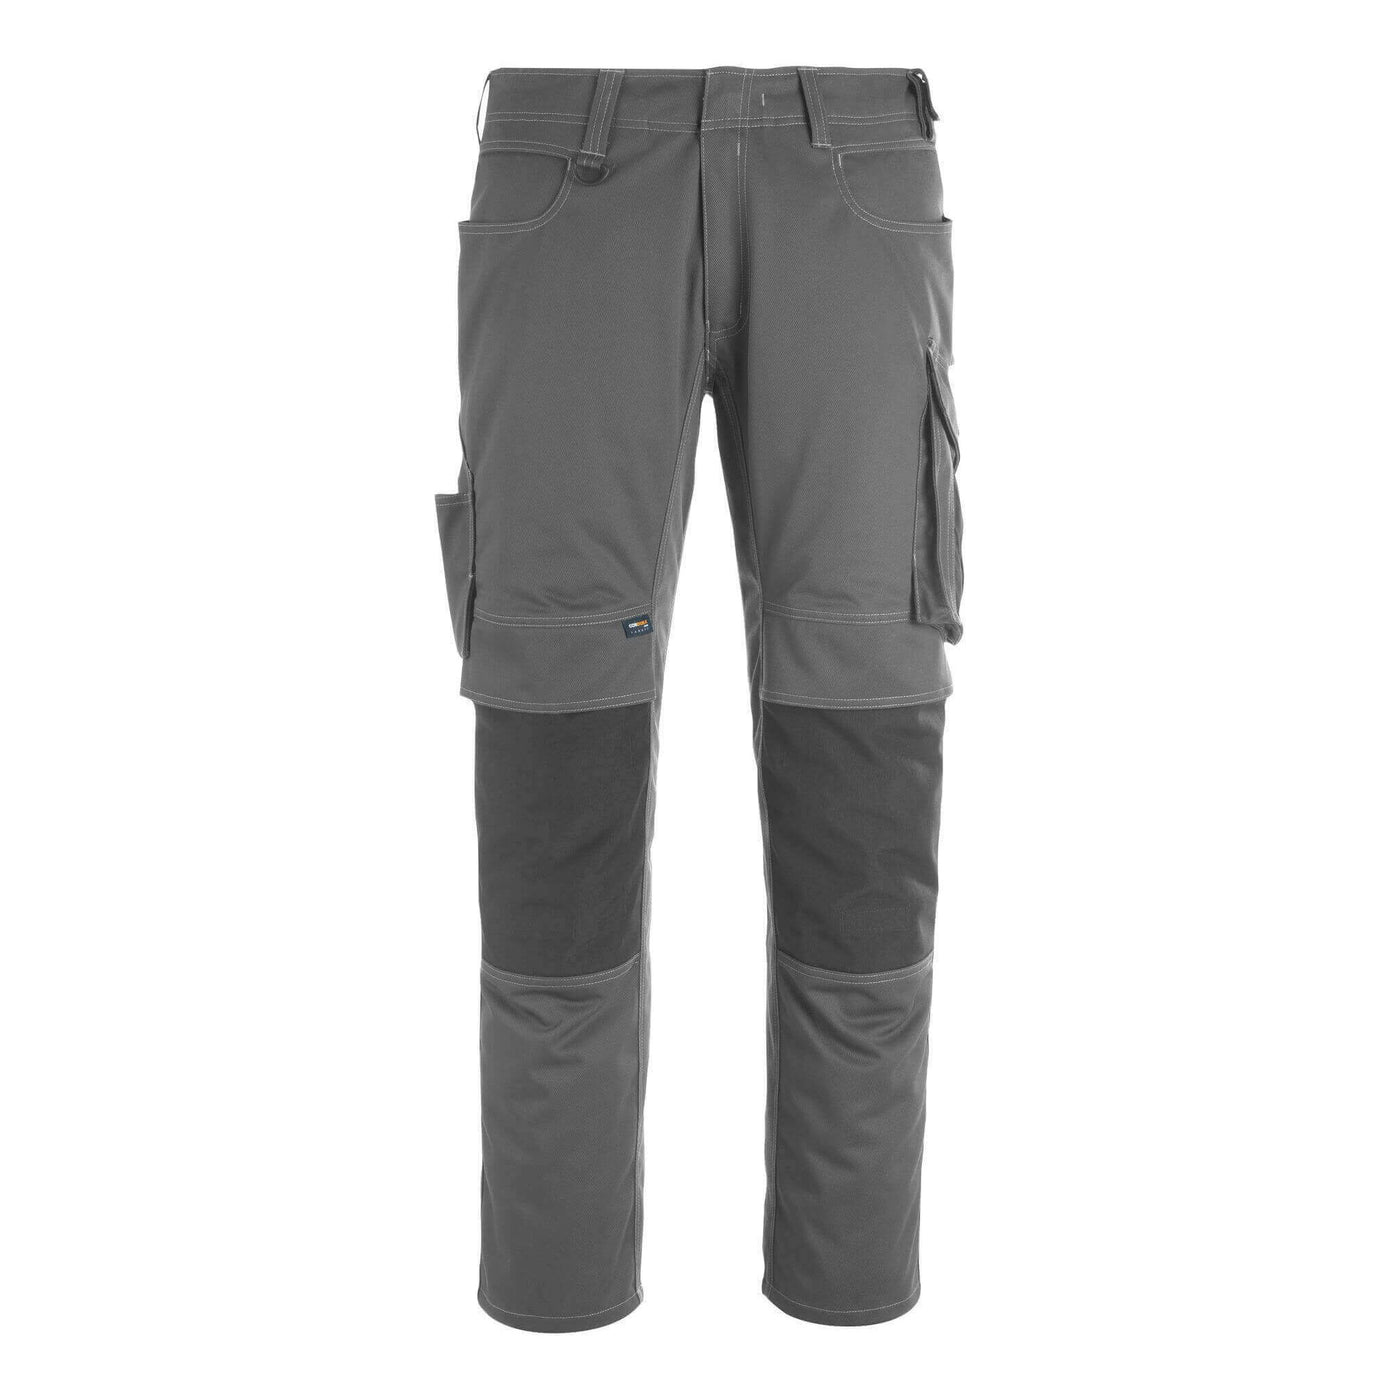 Mascot Erlangen Work Trousers Knee-Pad-Pockets 12179-203 Front #colour_dark-anthracite-grey-black